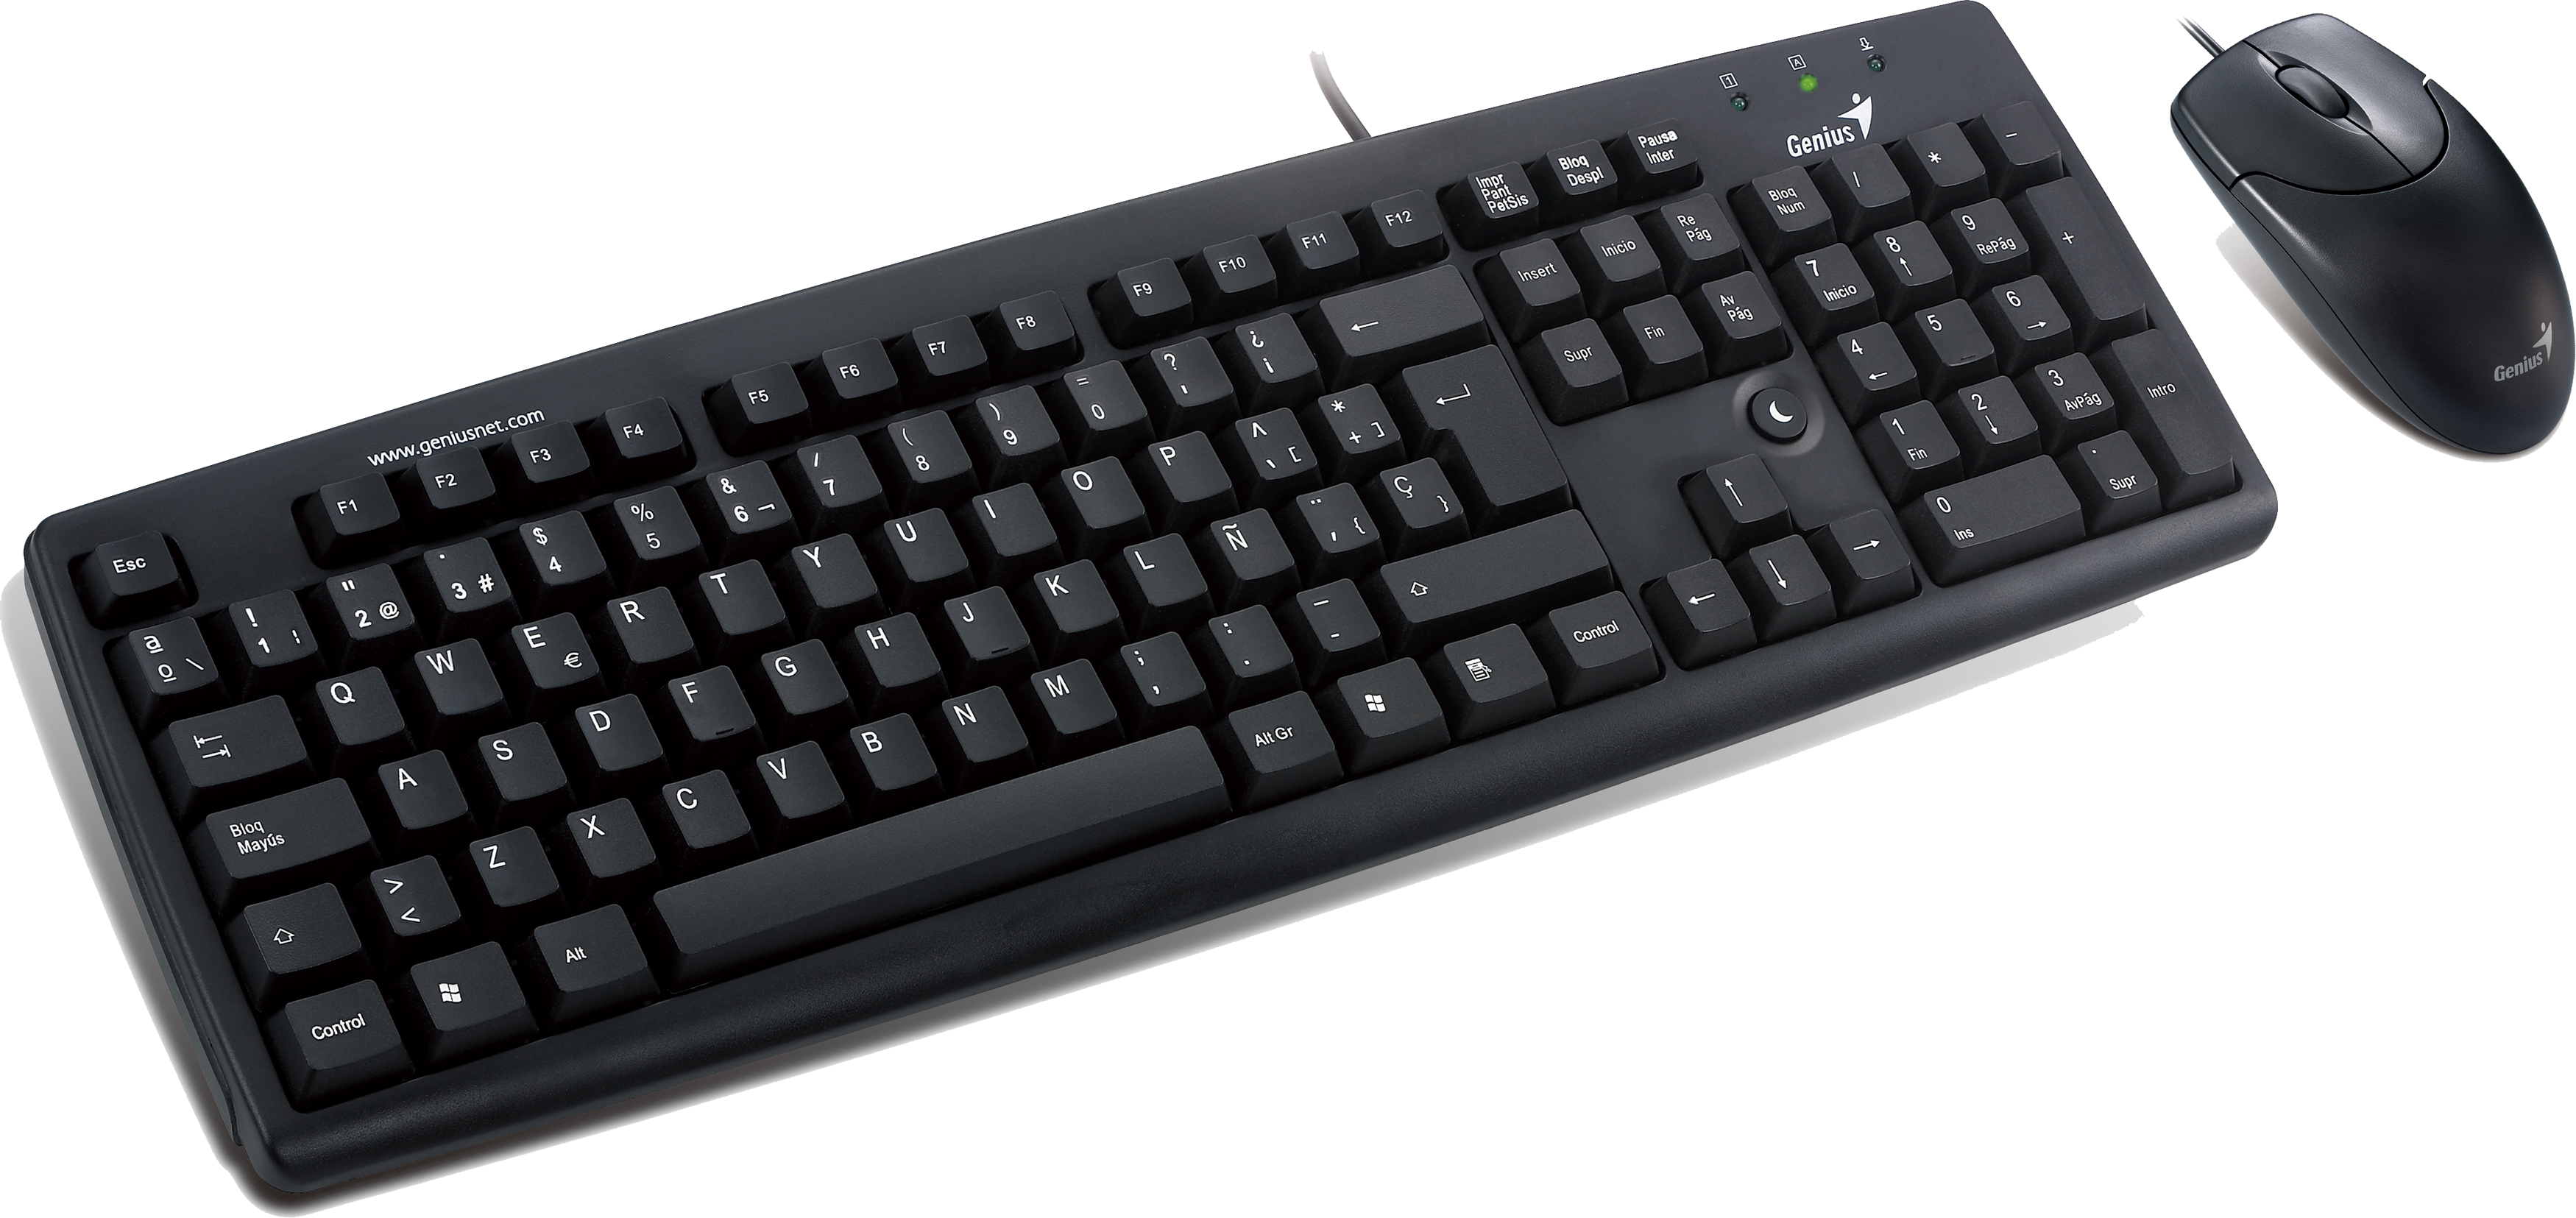 Keyboard PNG - 16979